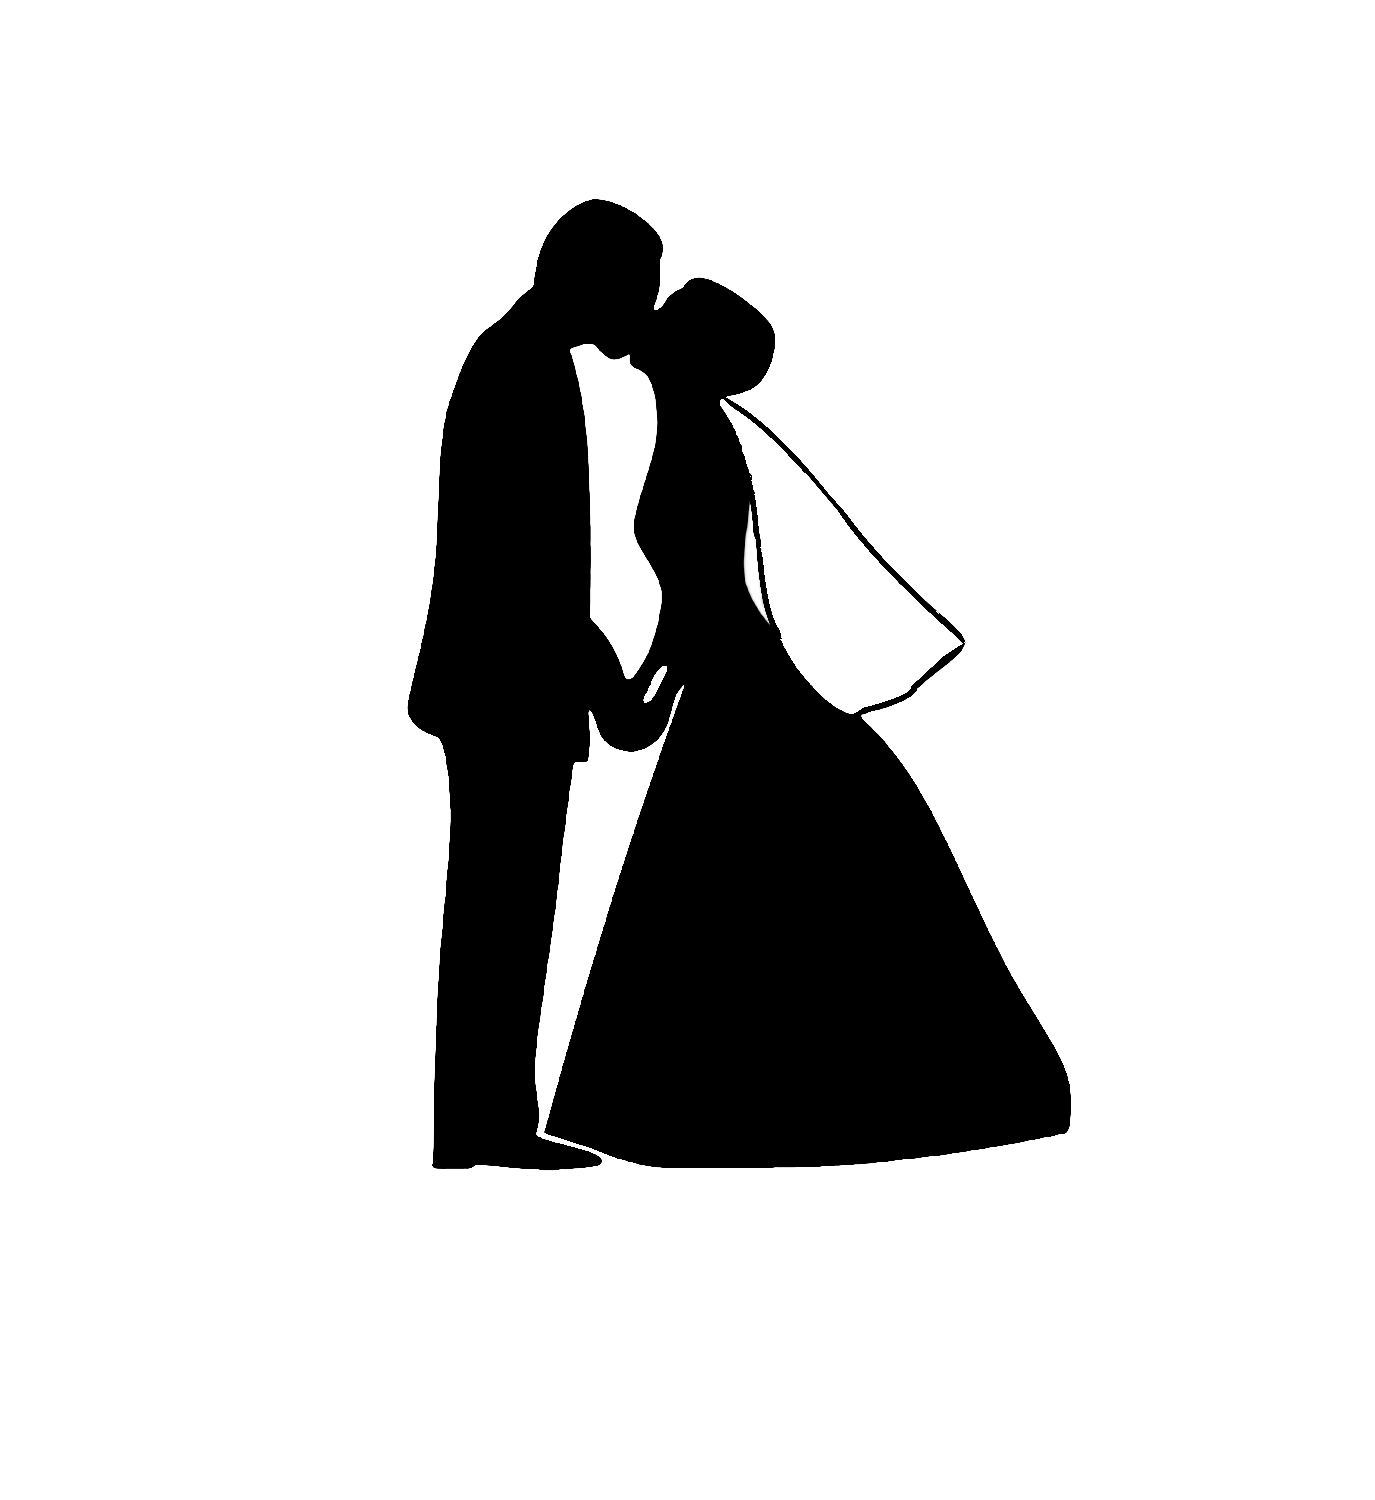 Bride and groom images clip art - ClipartFox